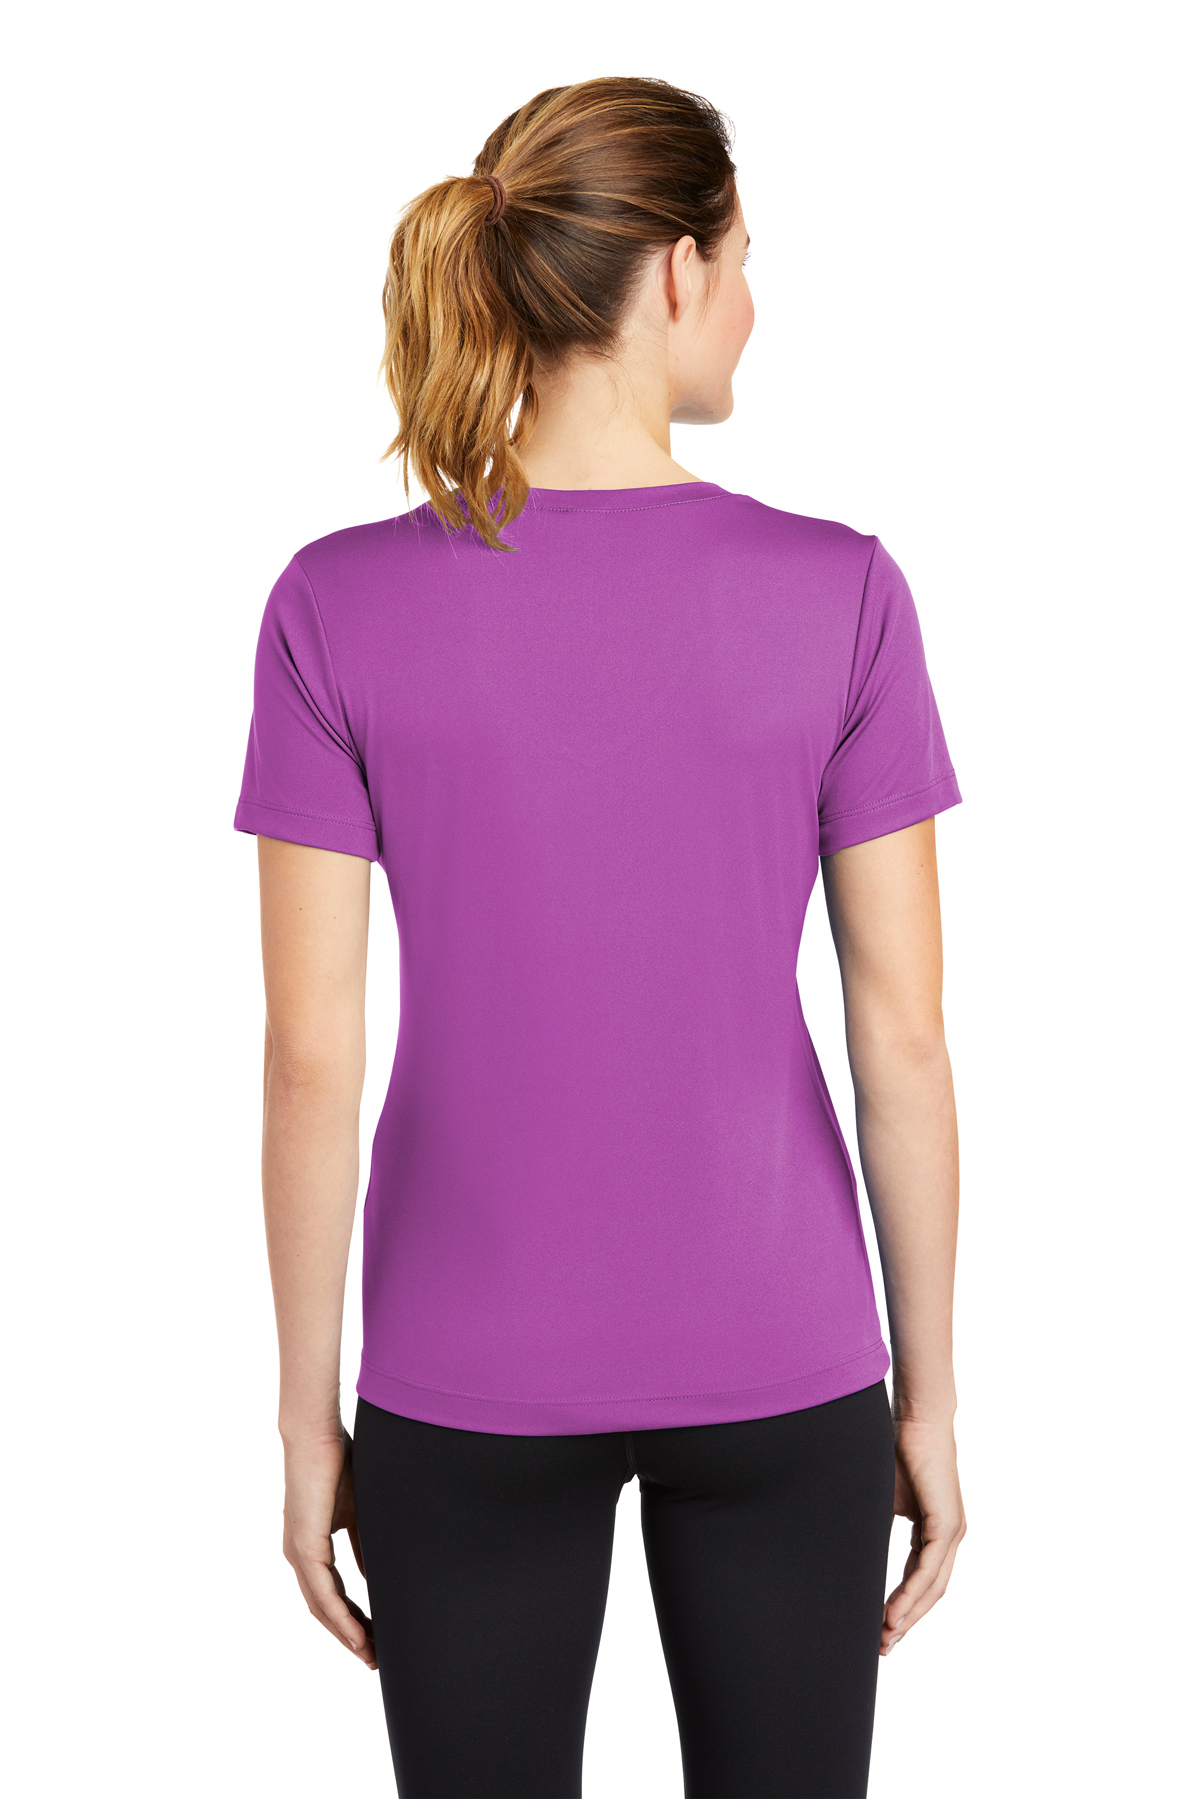 Womens Sport-Tek Dry Fit Gym Workout Performance Moisture Wicking T-Shirt LST350